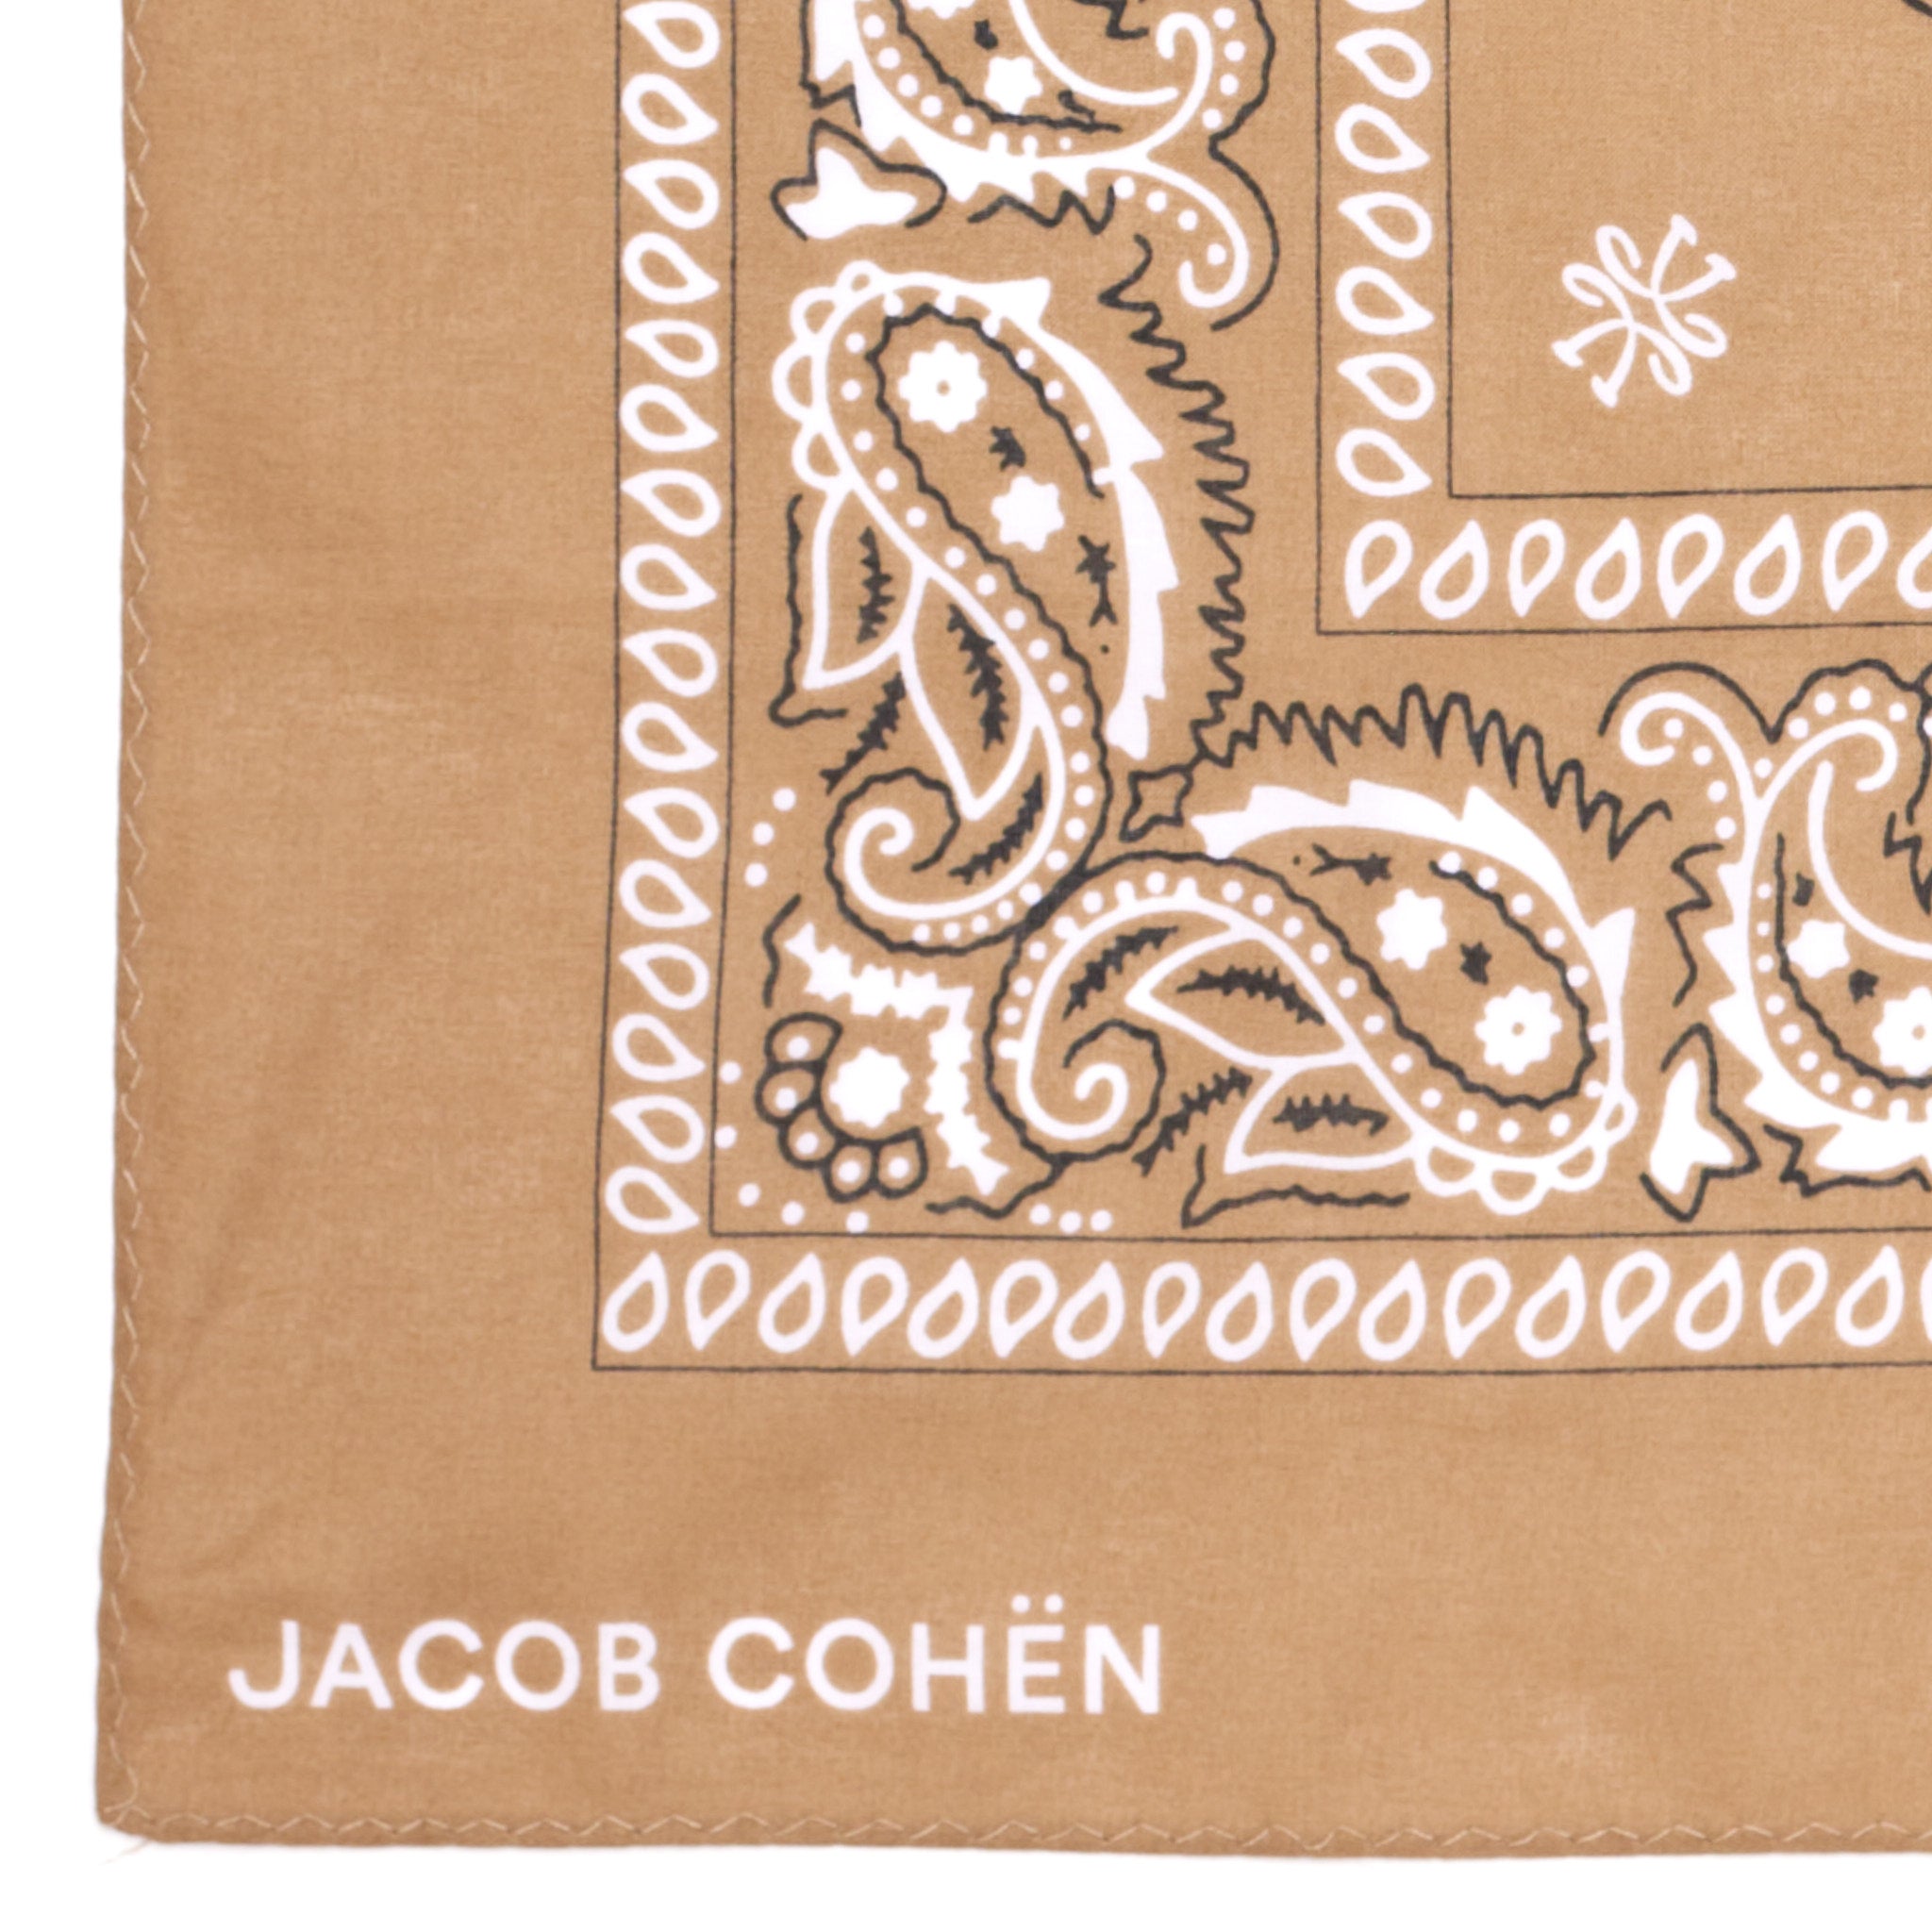 JACOB COHEN Khaki Paisley Printed Pattern Cotton Pocket Square Bandana NEW